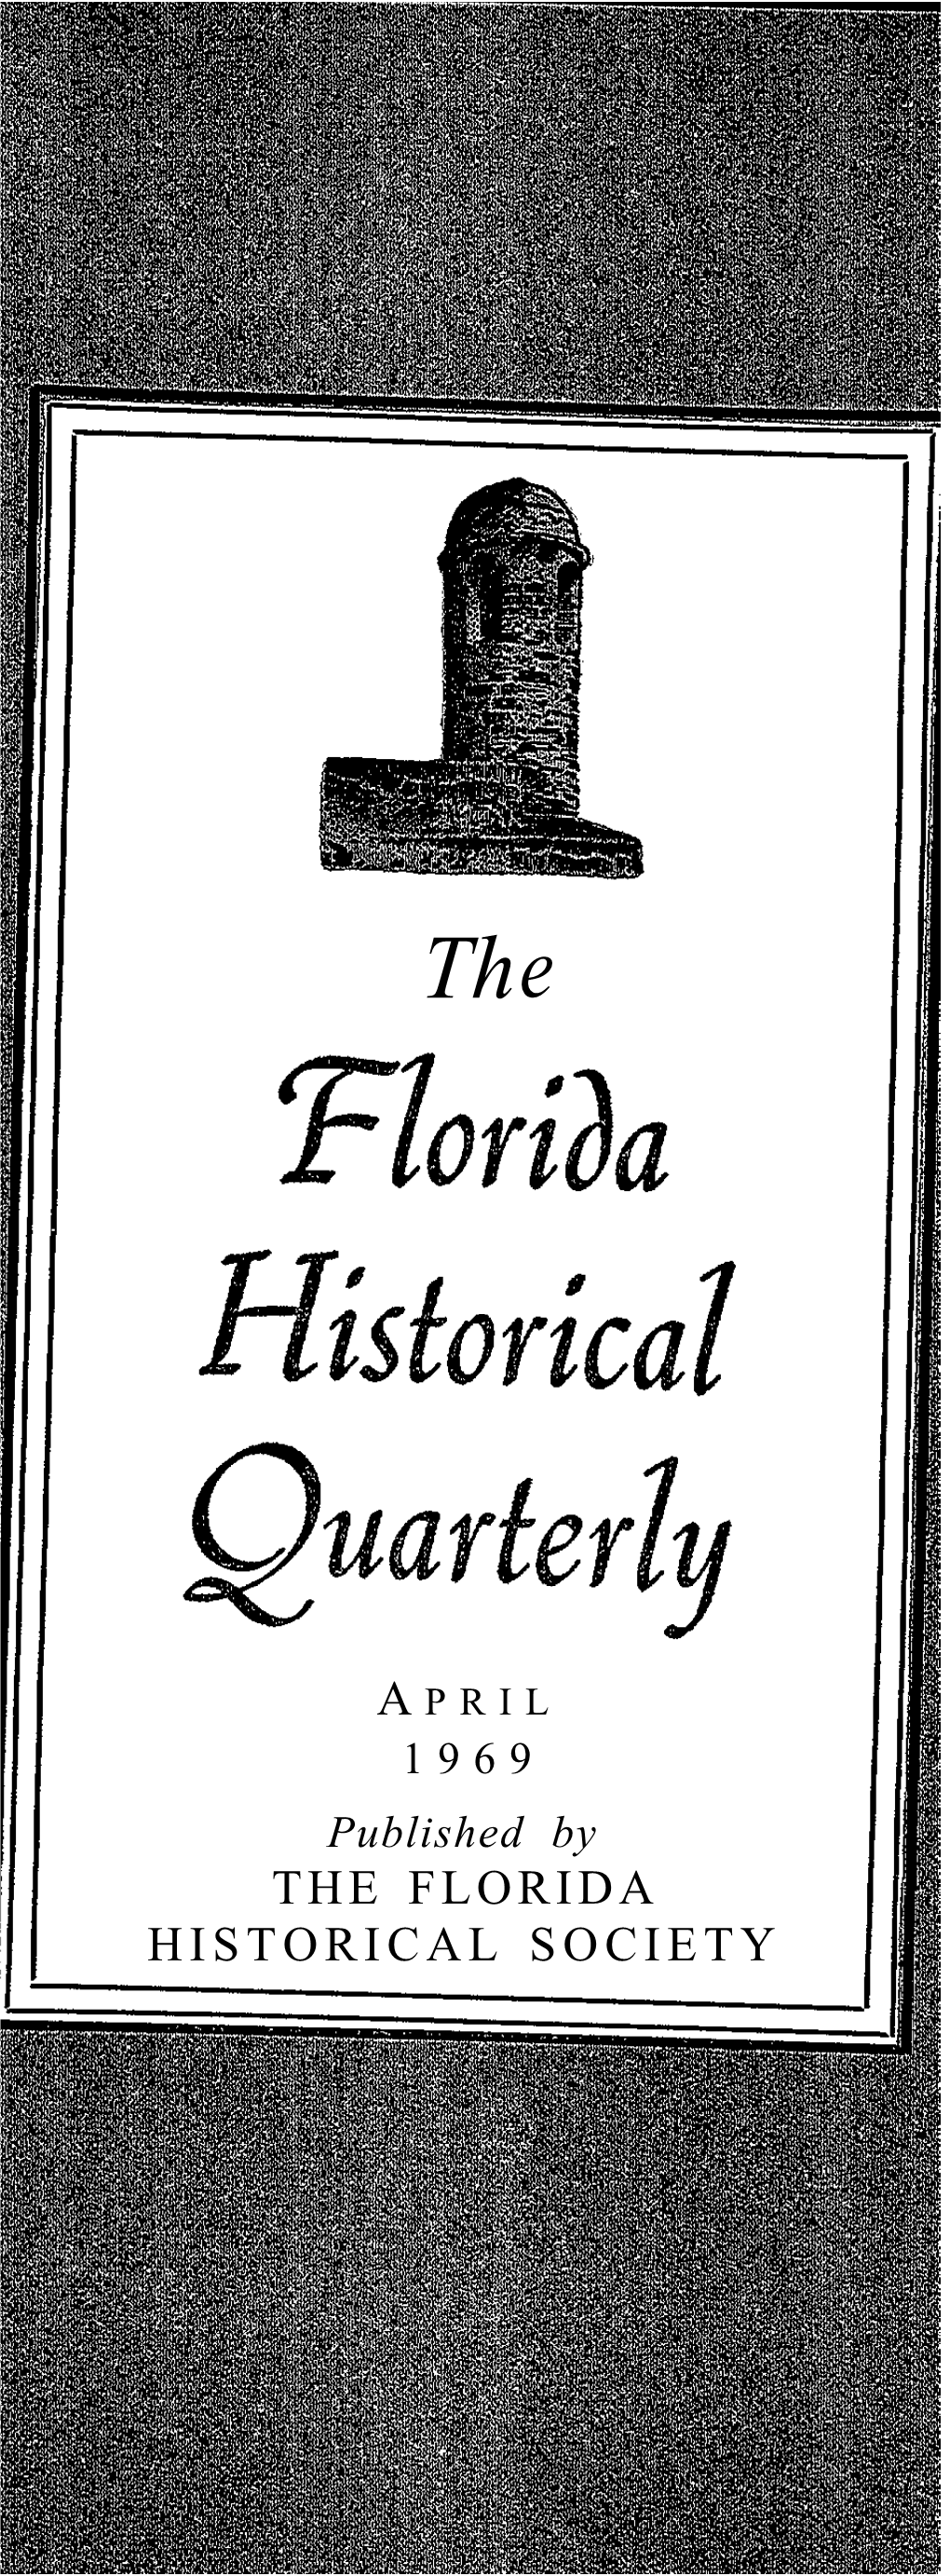 The Florida Historical Quarterly Volume Xlvii April 1969 Number 4